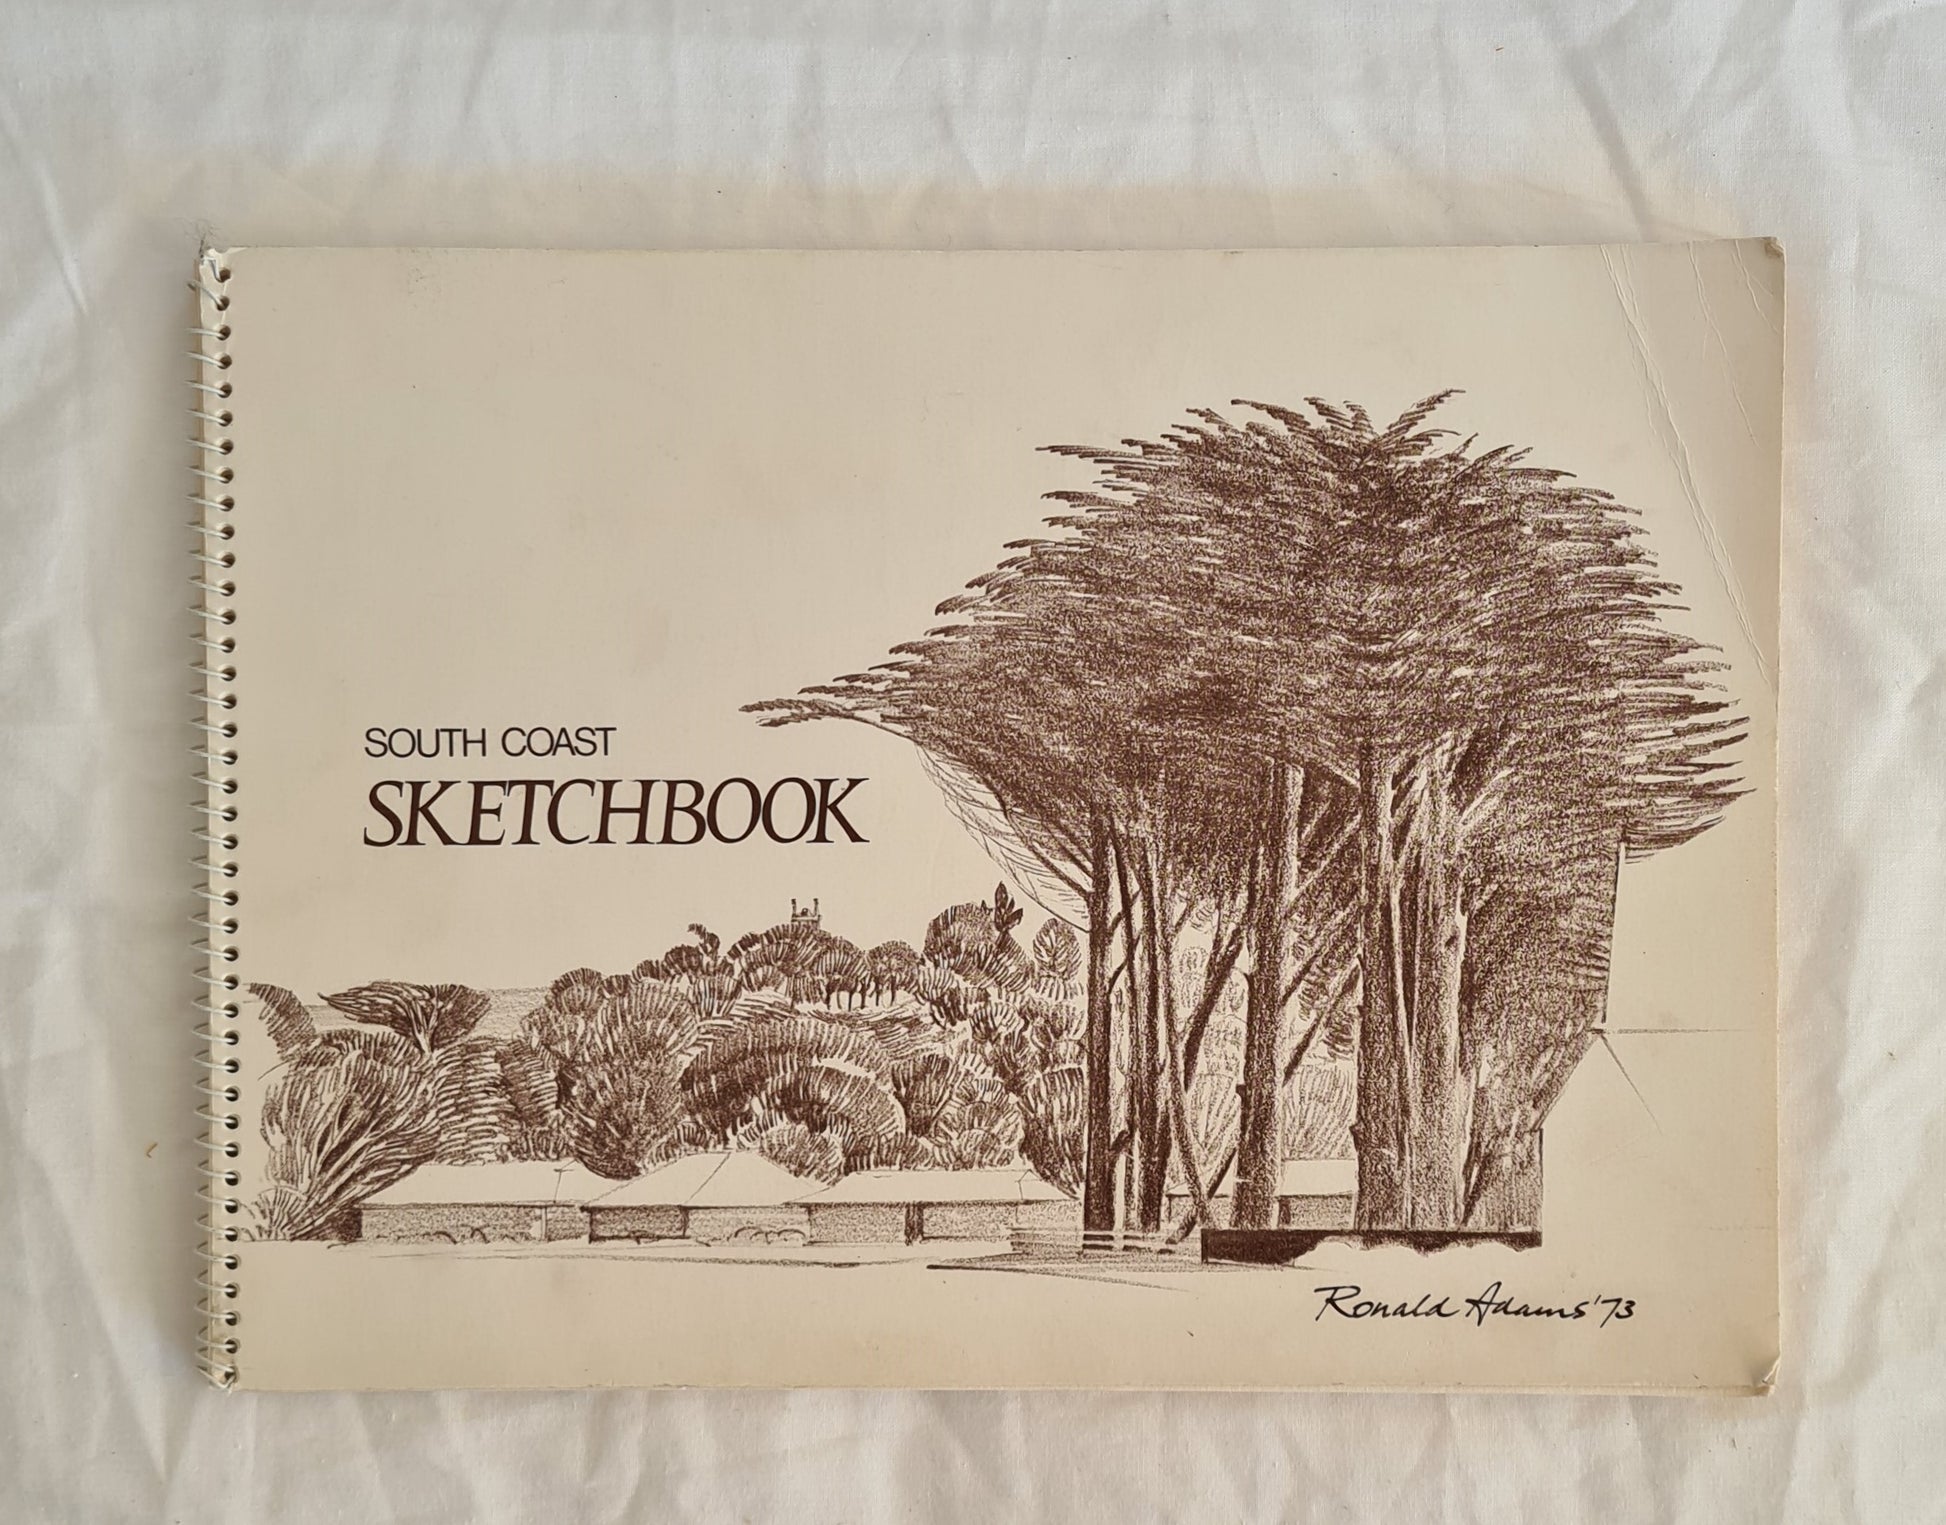 South Coast Sketchbook  by Ronald Adams